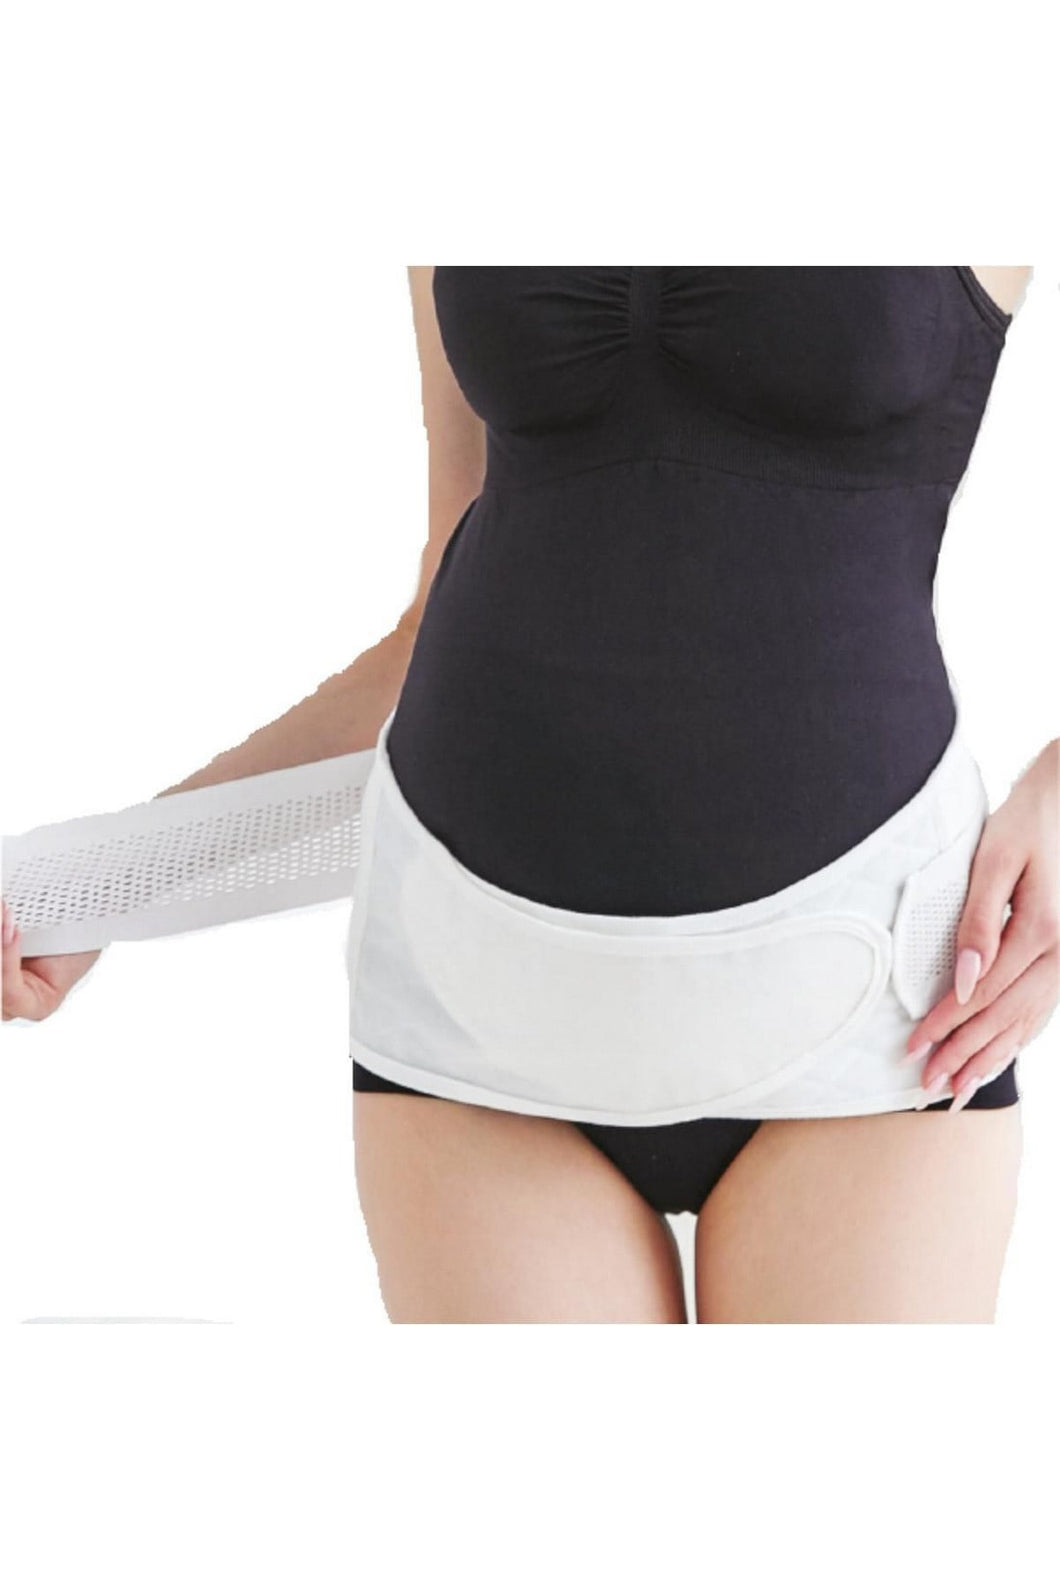 Pret a Pregger Bellywise Pregnancy Cotton Support Belt - White